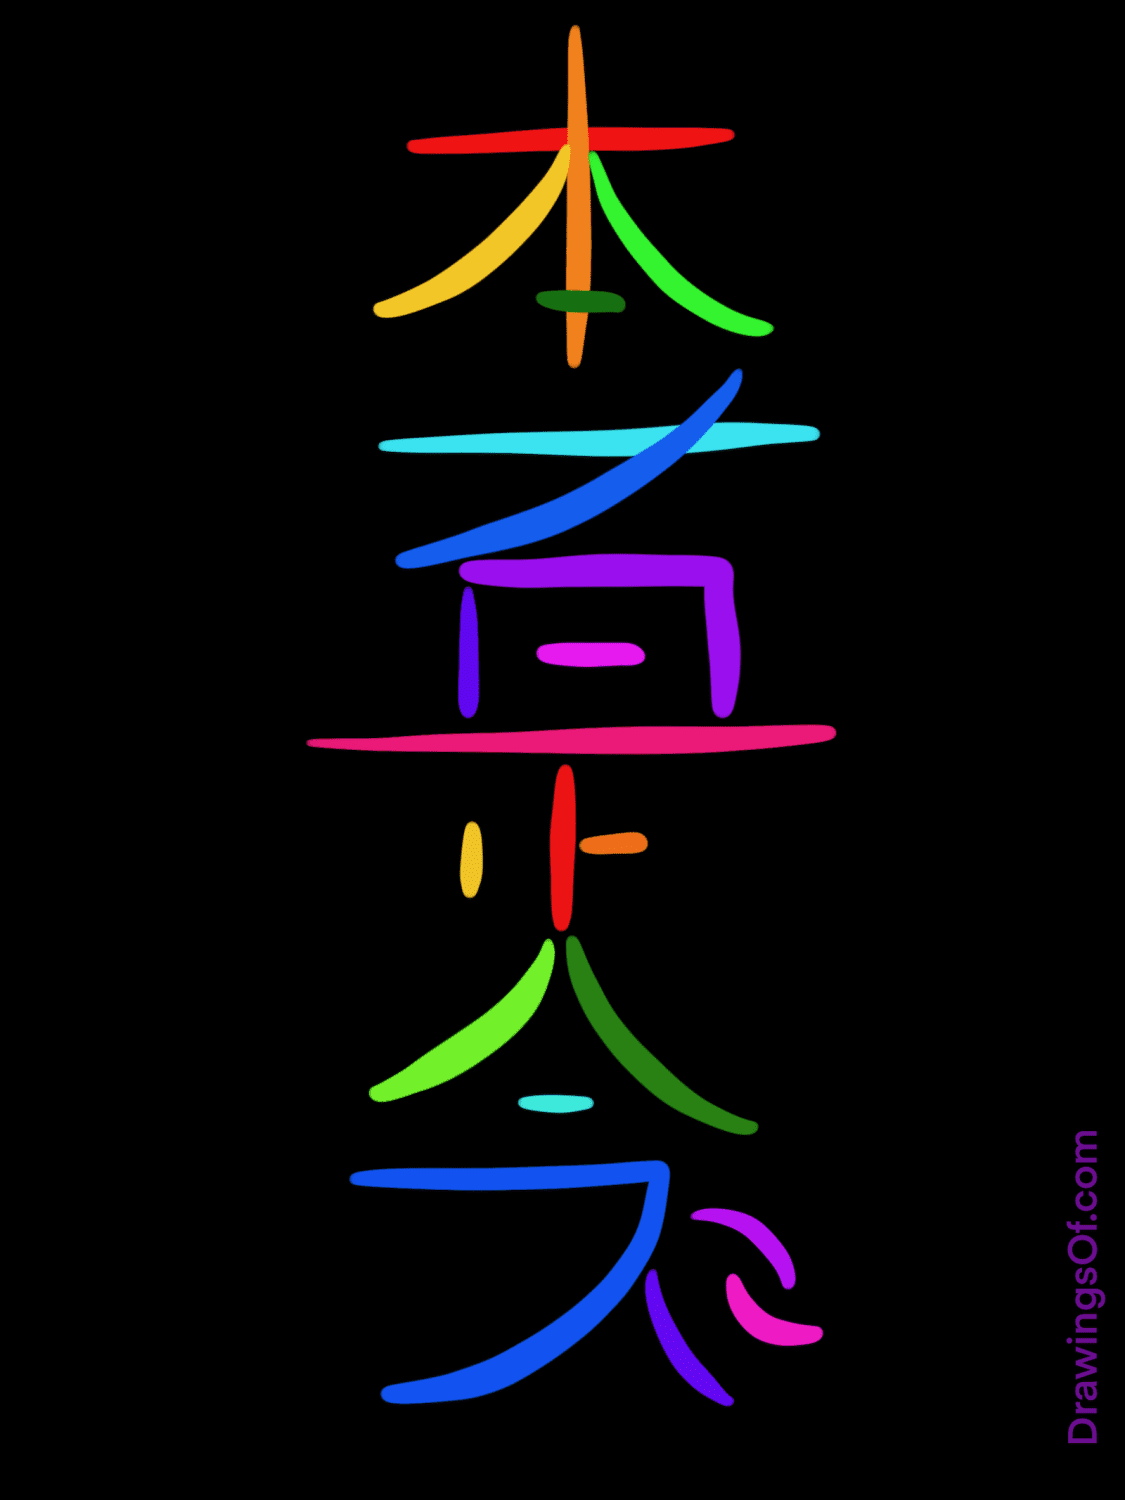 Hon Sha Ze Sho Nen symbol